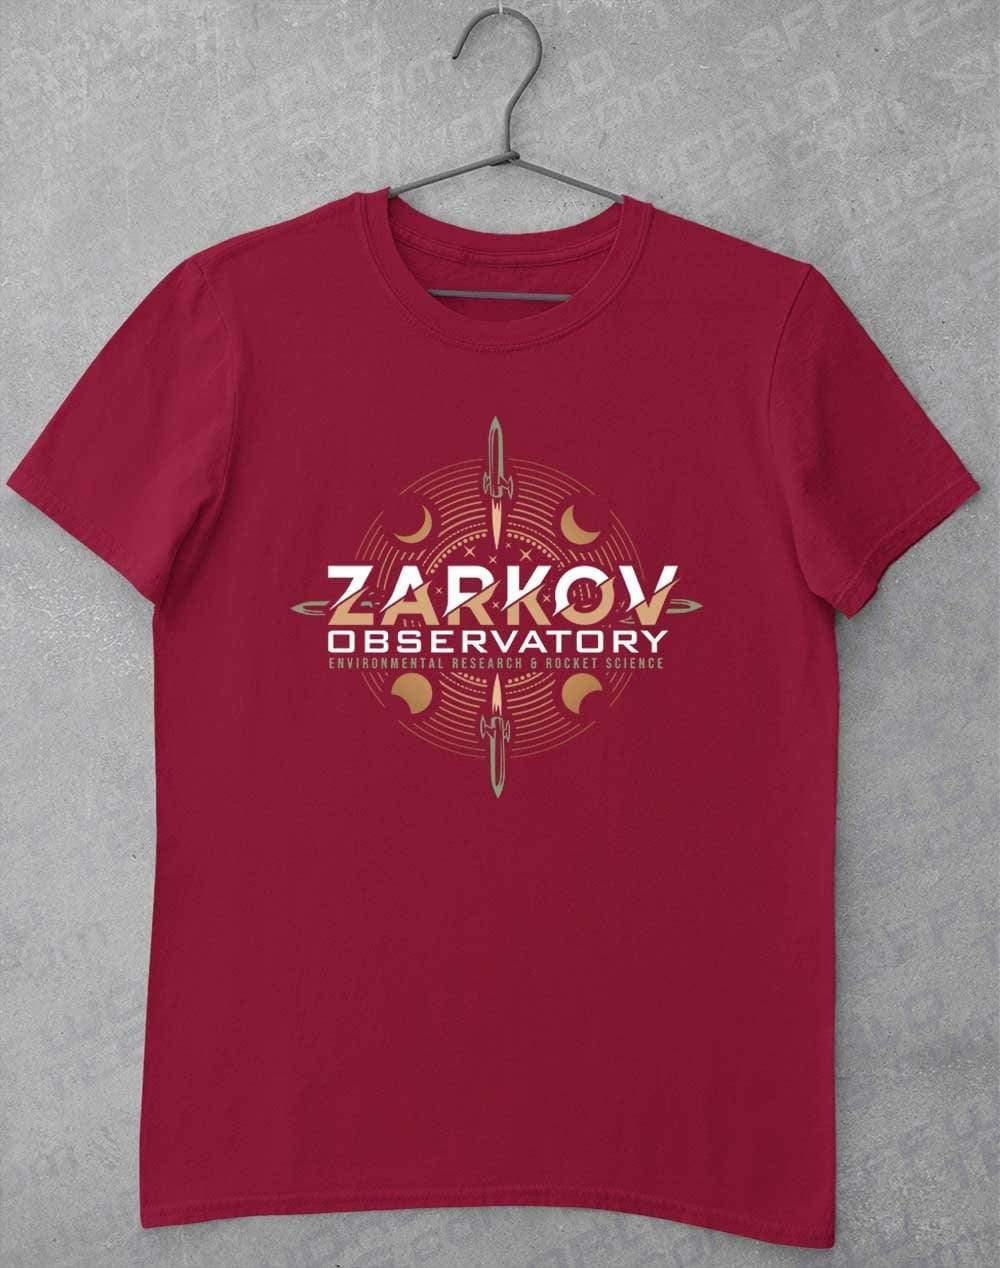 Zarkov Observatory T-Shirt S / Cardinal Red  - Off World Tees